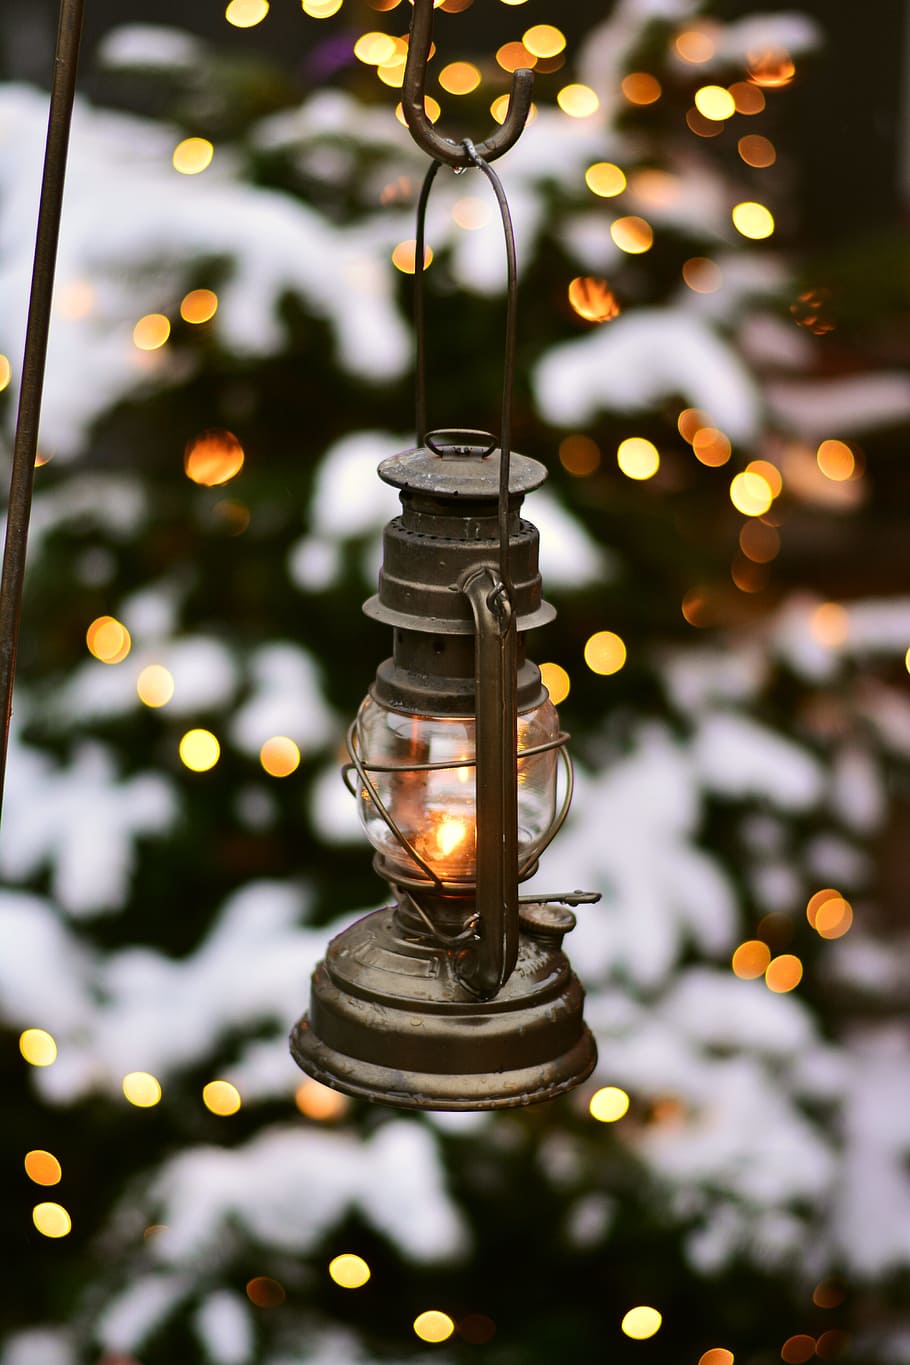 gris, lámpara de queroseno, colgado, negro, gancho de metal, linterna, navidad, decoración navideña, bokeh, luz